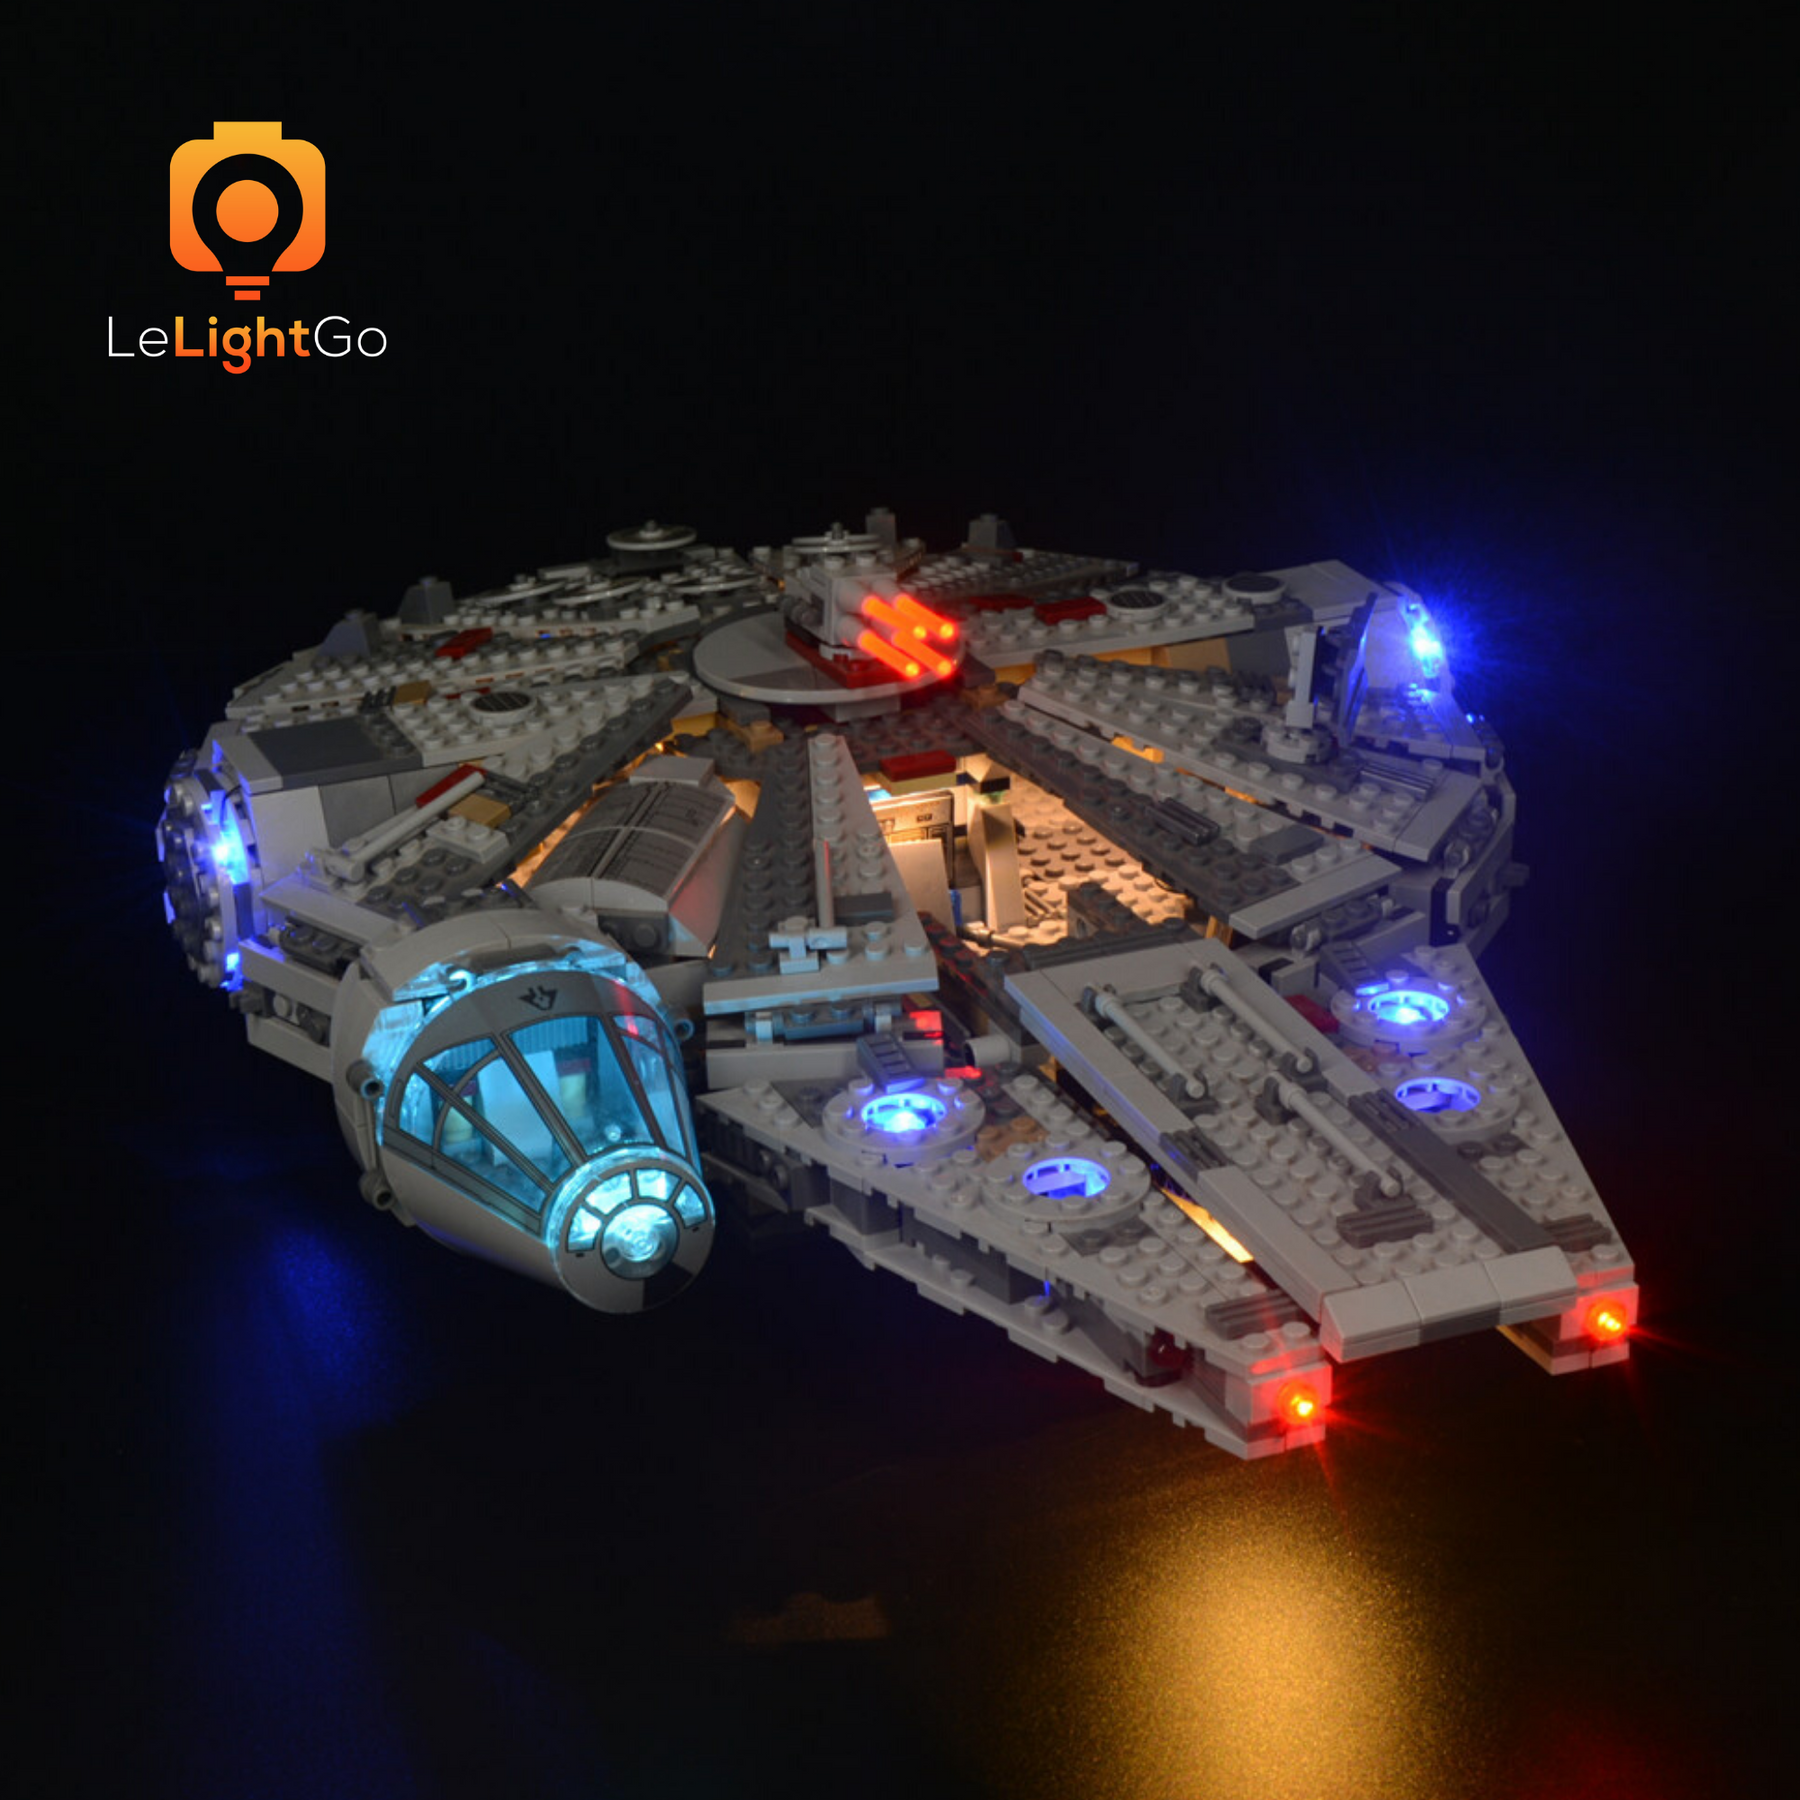 Kejser peregrination definitive Light Kit For Star Wars Millennium Falcon 75105 – LeLightGo